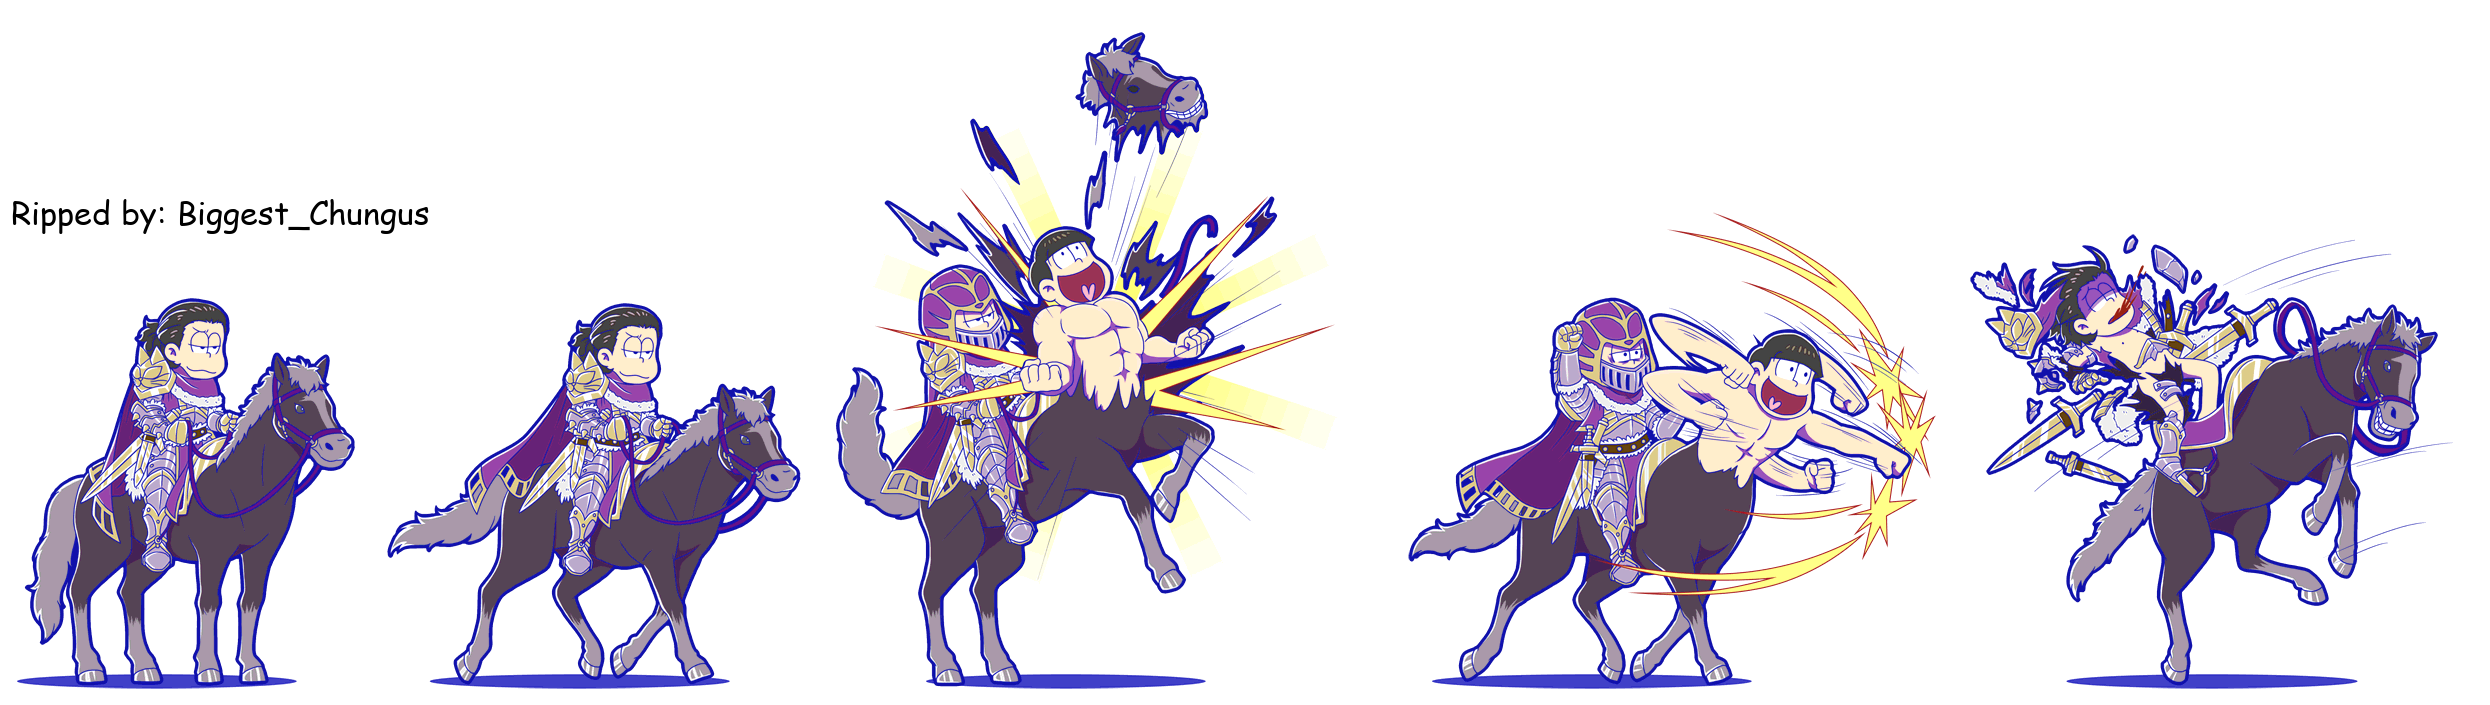 Ichimatsu (Knight with Horse)